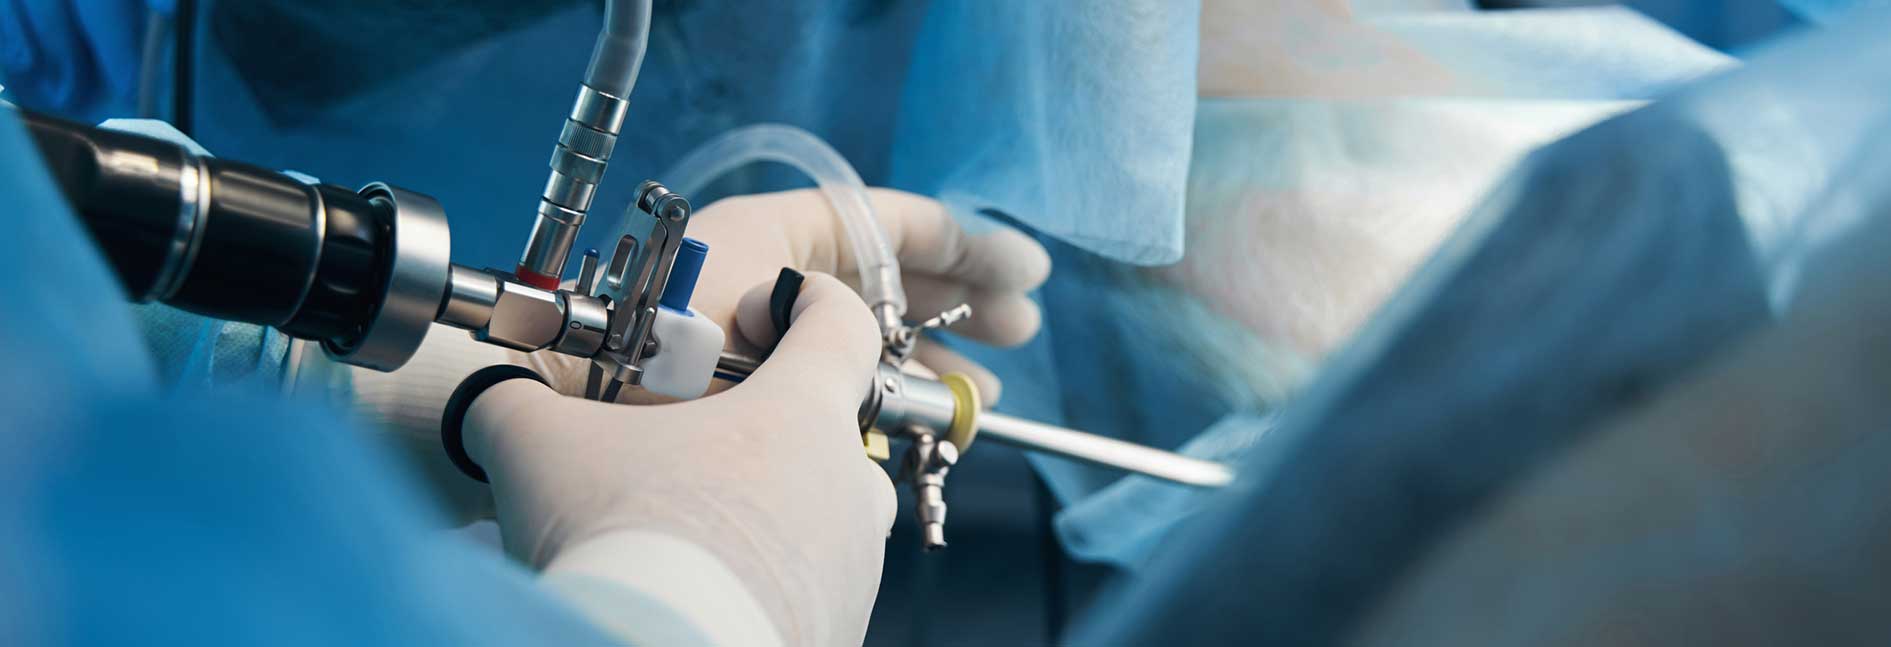 Surgery using endoscopy equipment